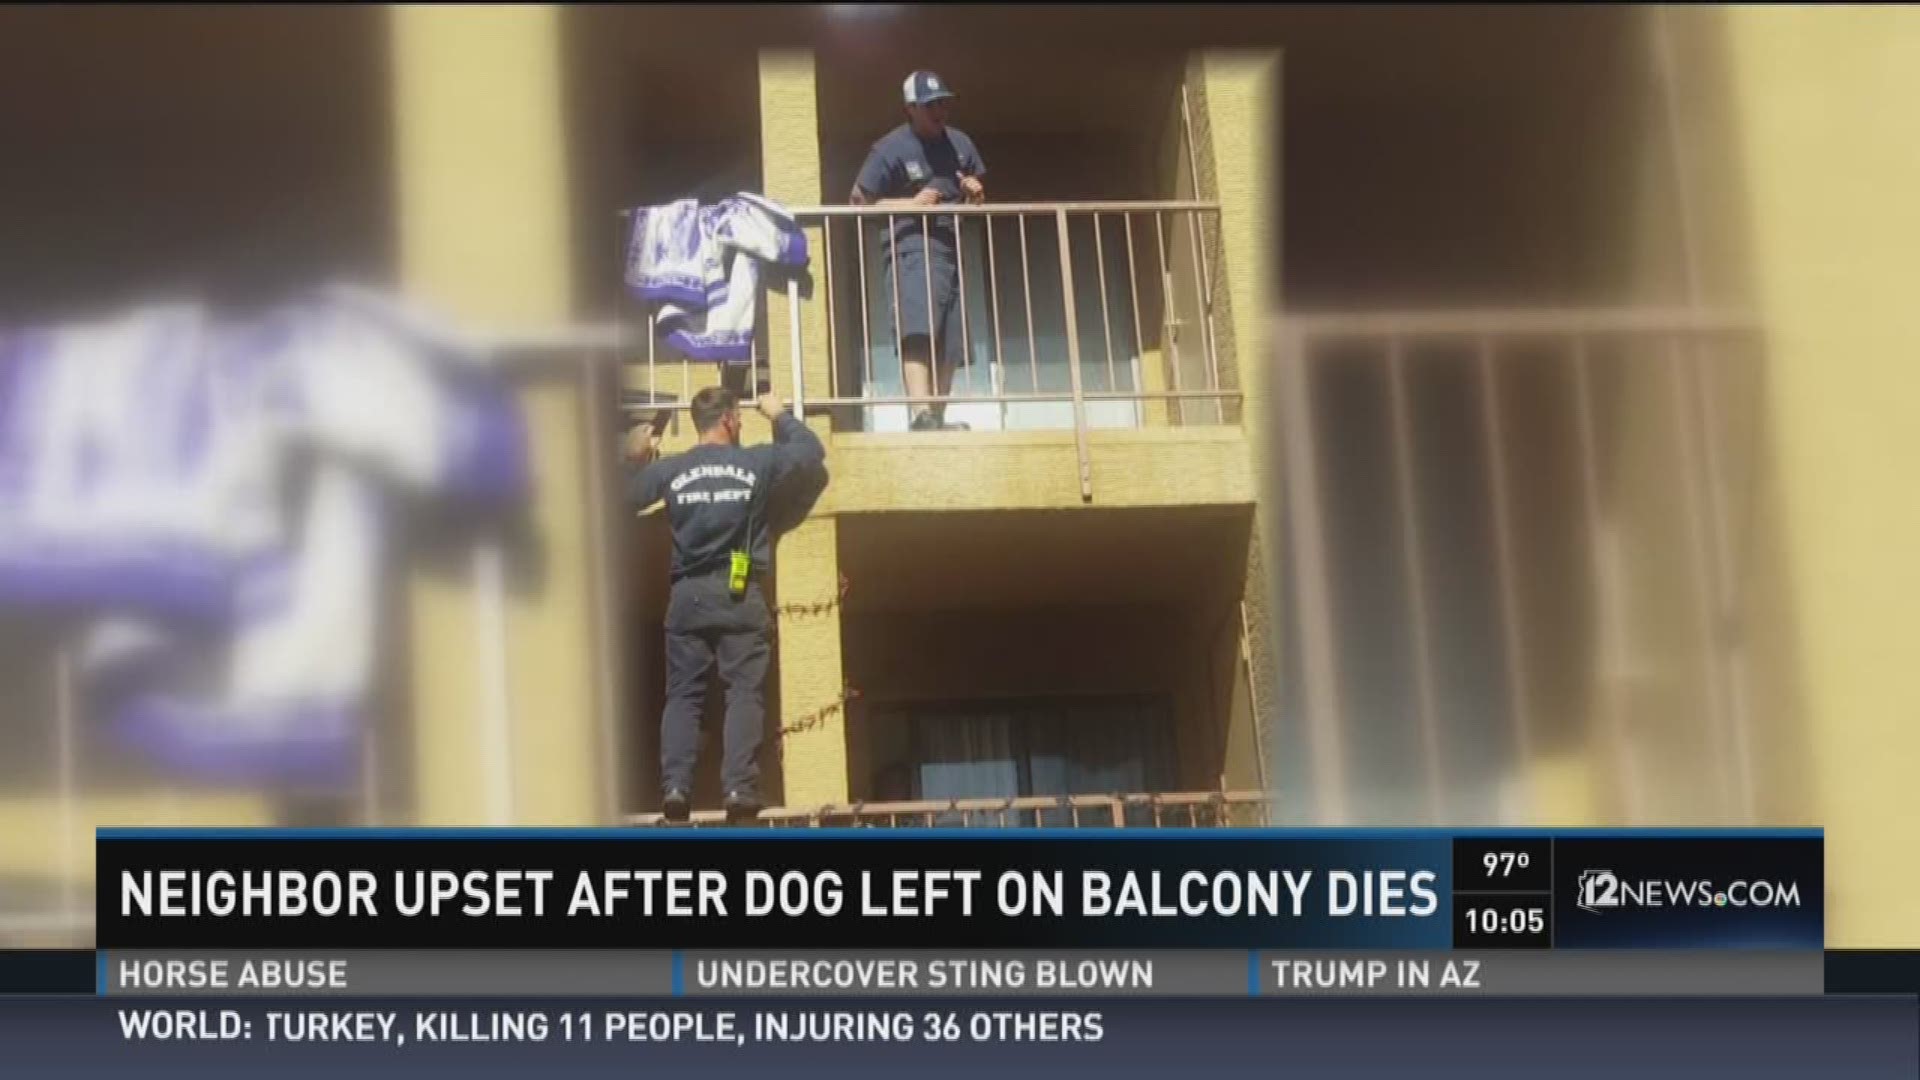 Neighbor upset after dog left on balcony dies.